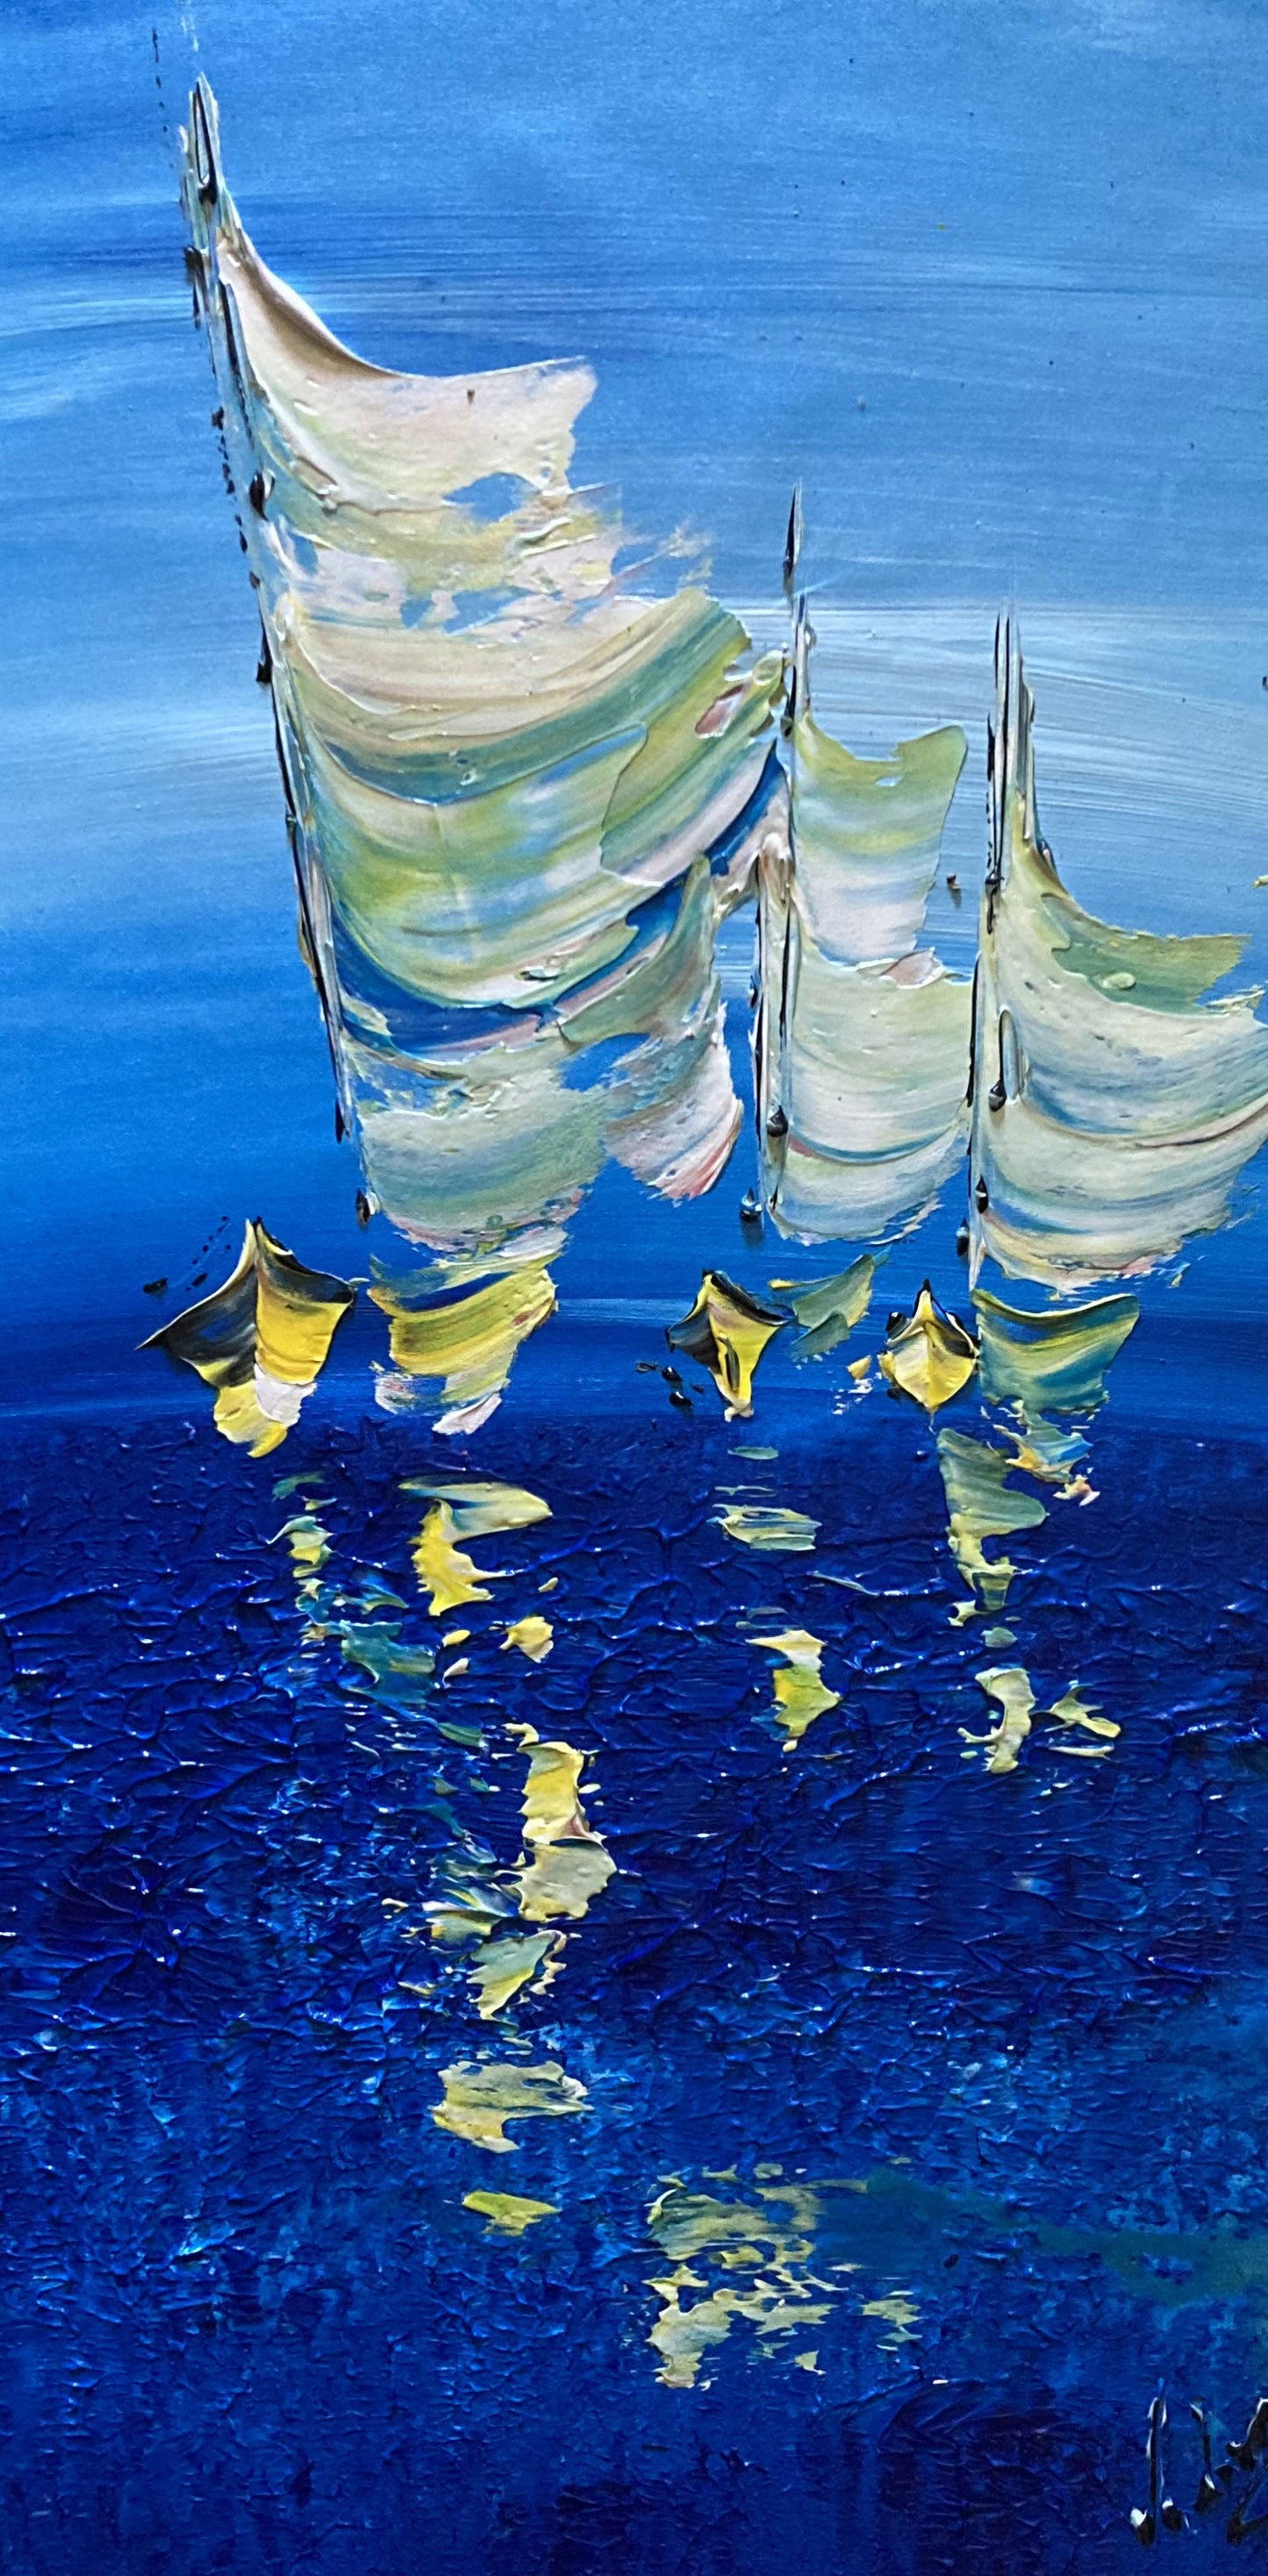 Tableau Marine voiliers peinture sur toile 30x60 virginie Linard ©